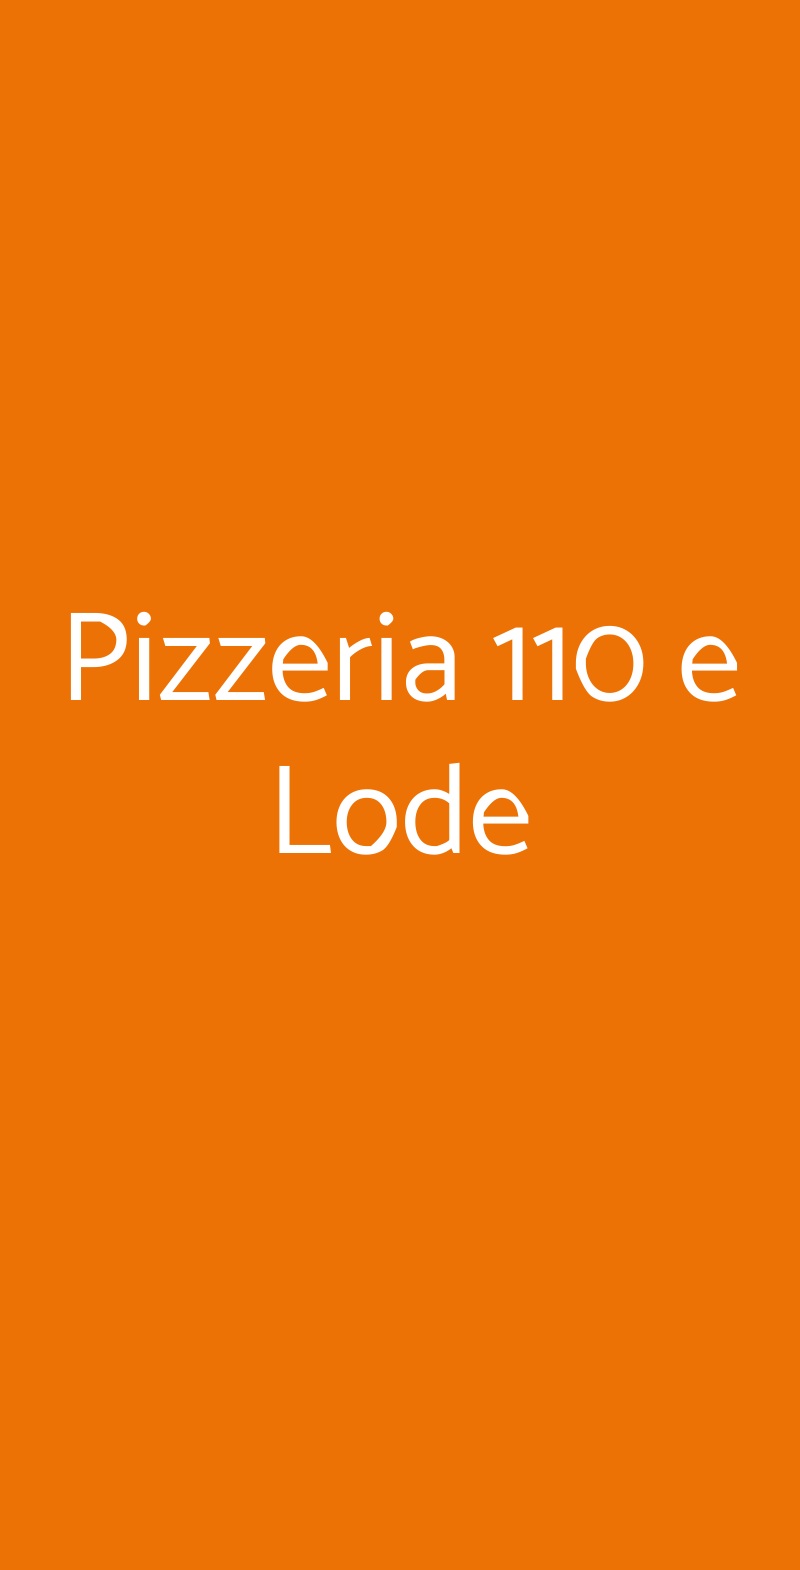 Pizzeria 110 e Lode Napoli menù 1 pagina